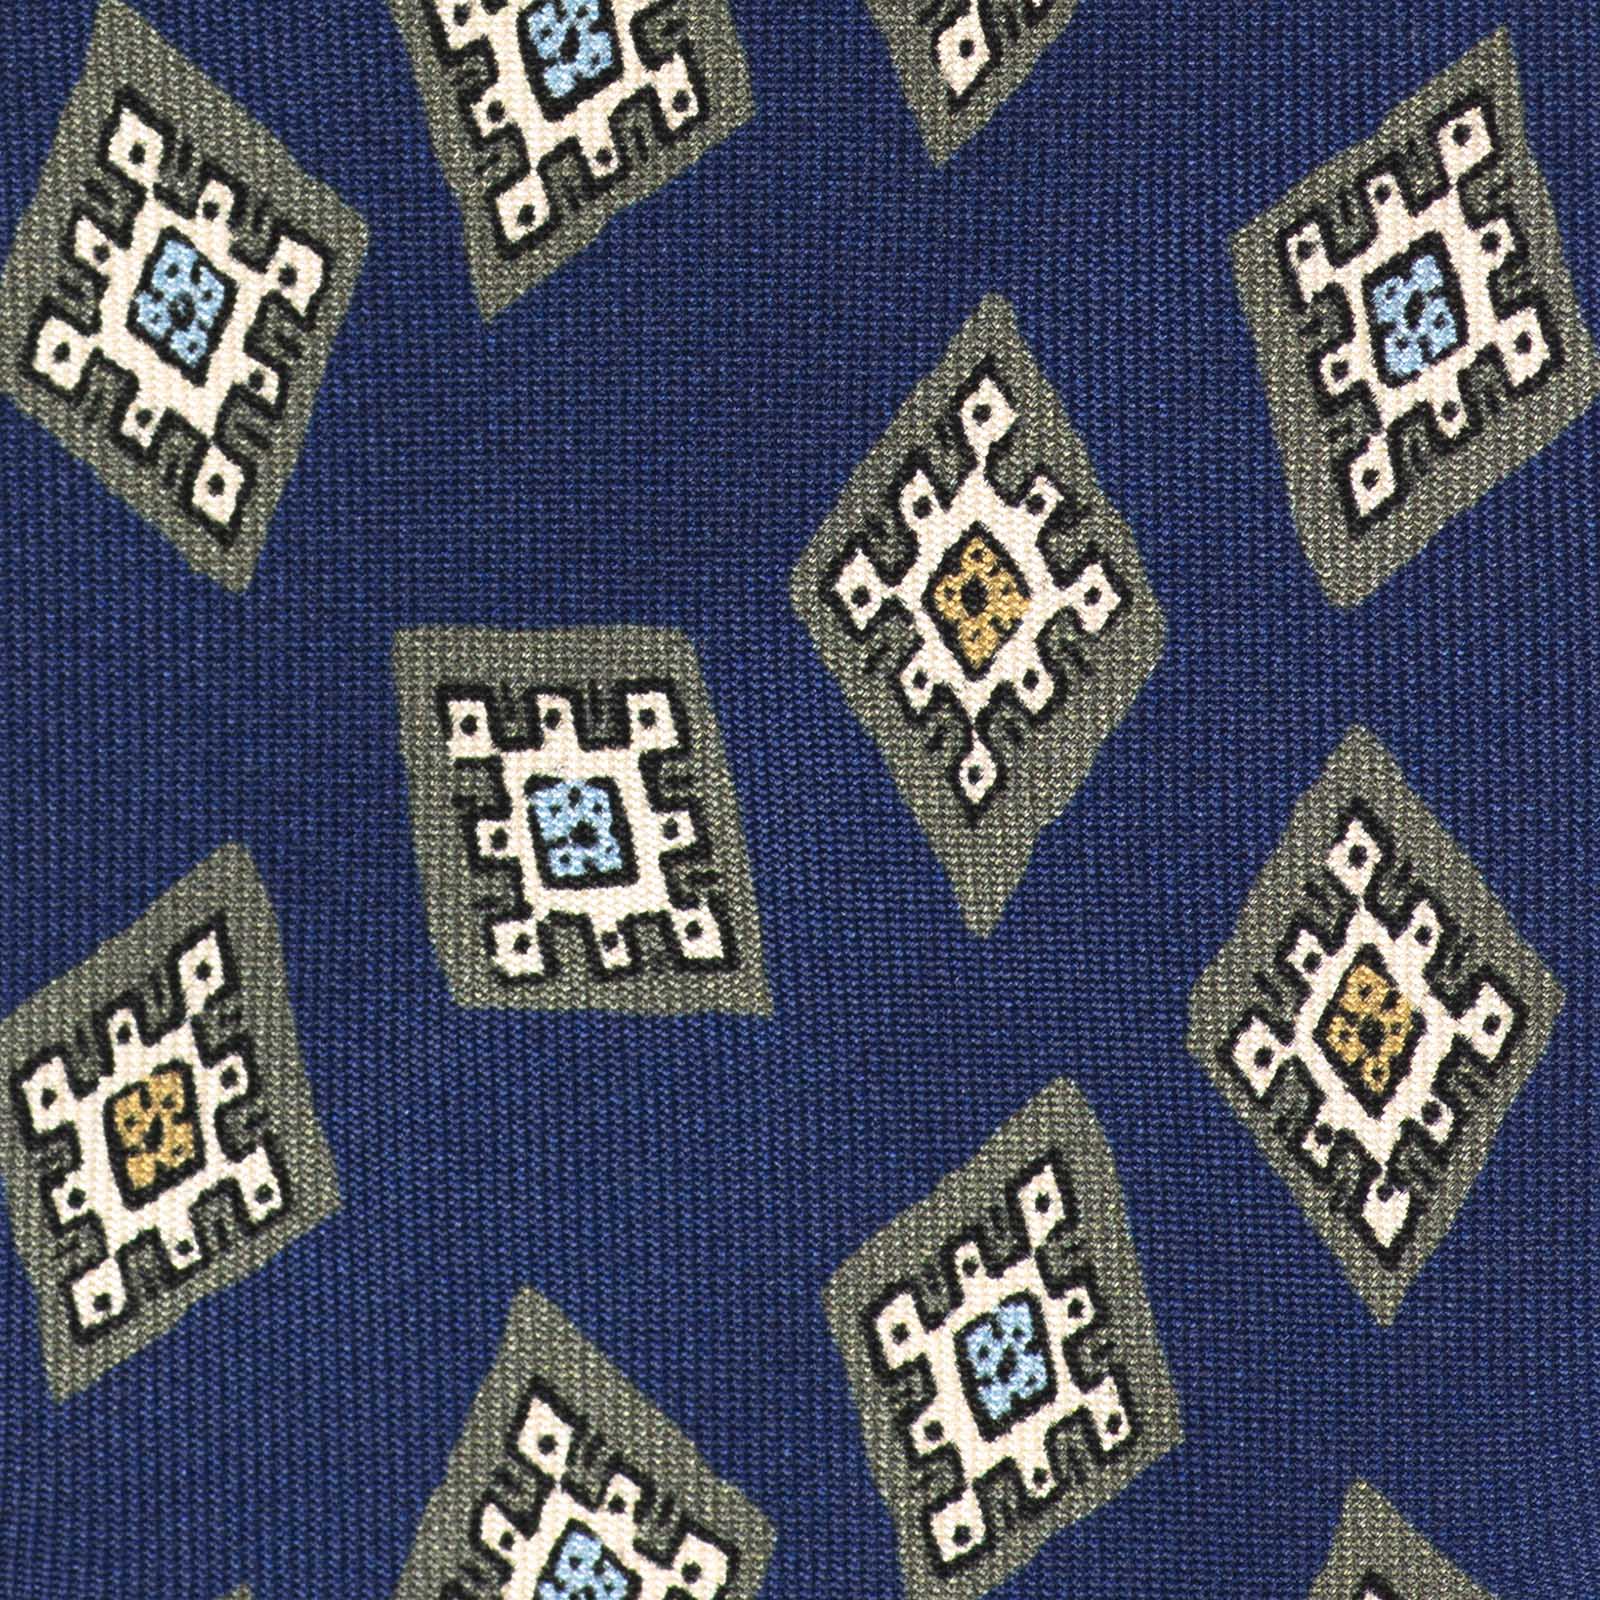 Mariano Rubinacci - Silk twill navy blue tie with geometric print